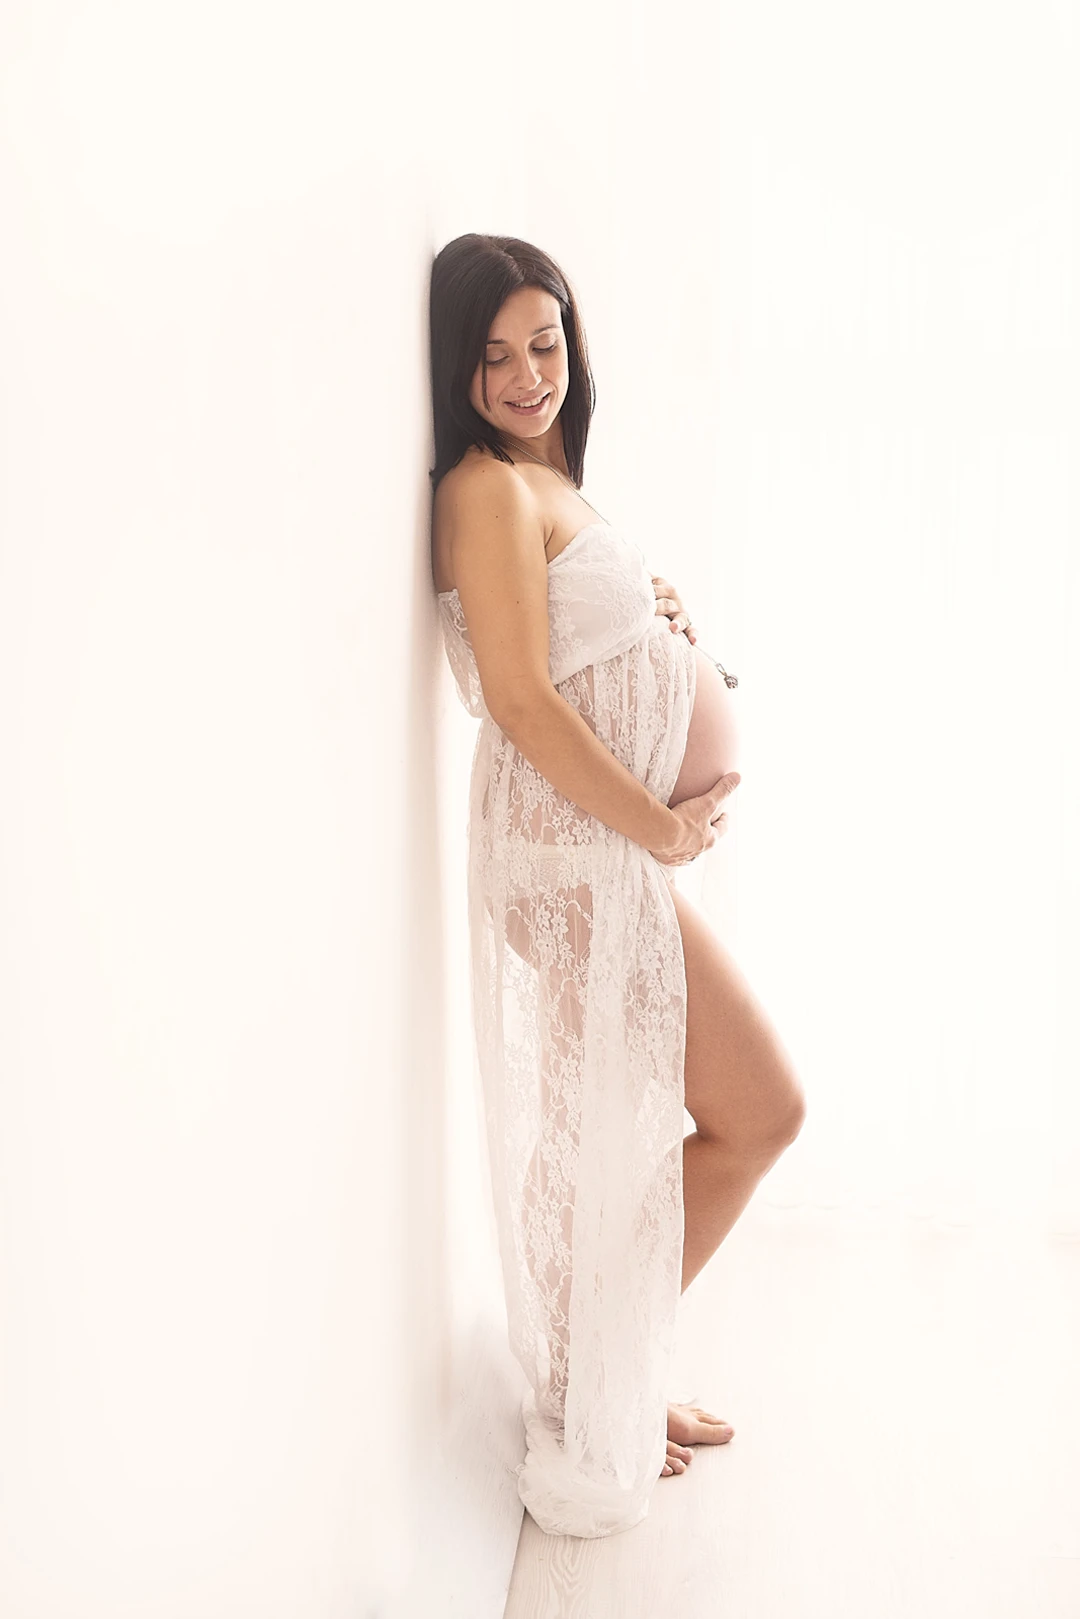 Fotografa di gravidanza Isabella Allamandri Ph